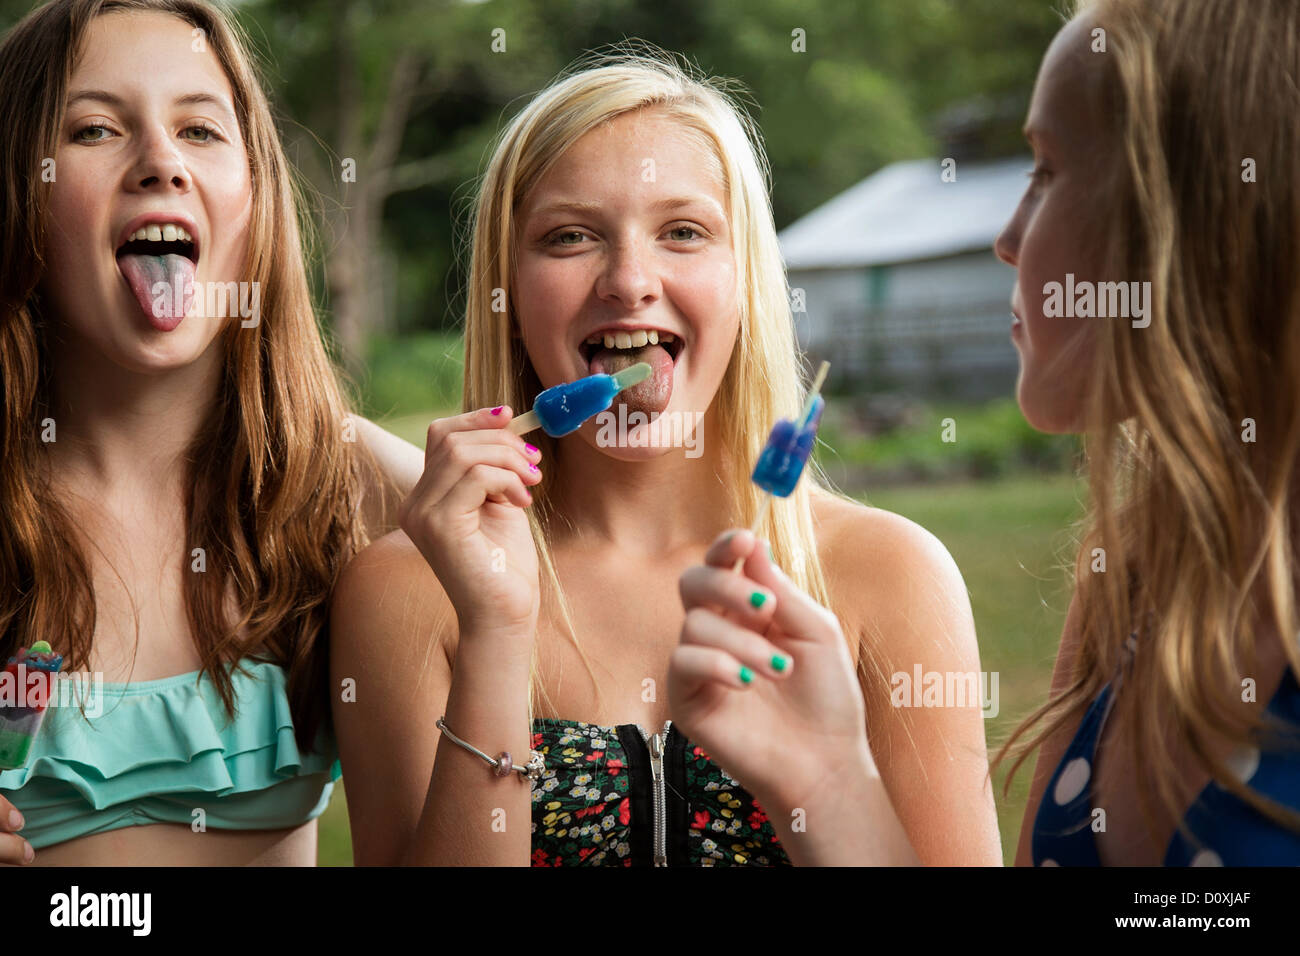 Girls eating ice lollies Stock Photo